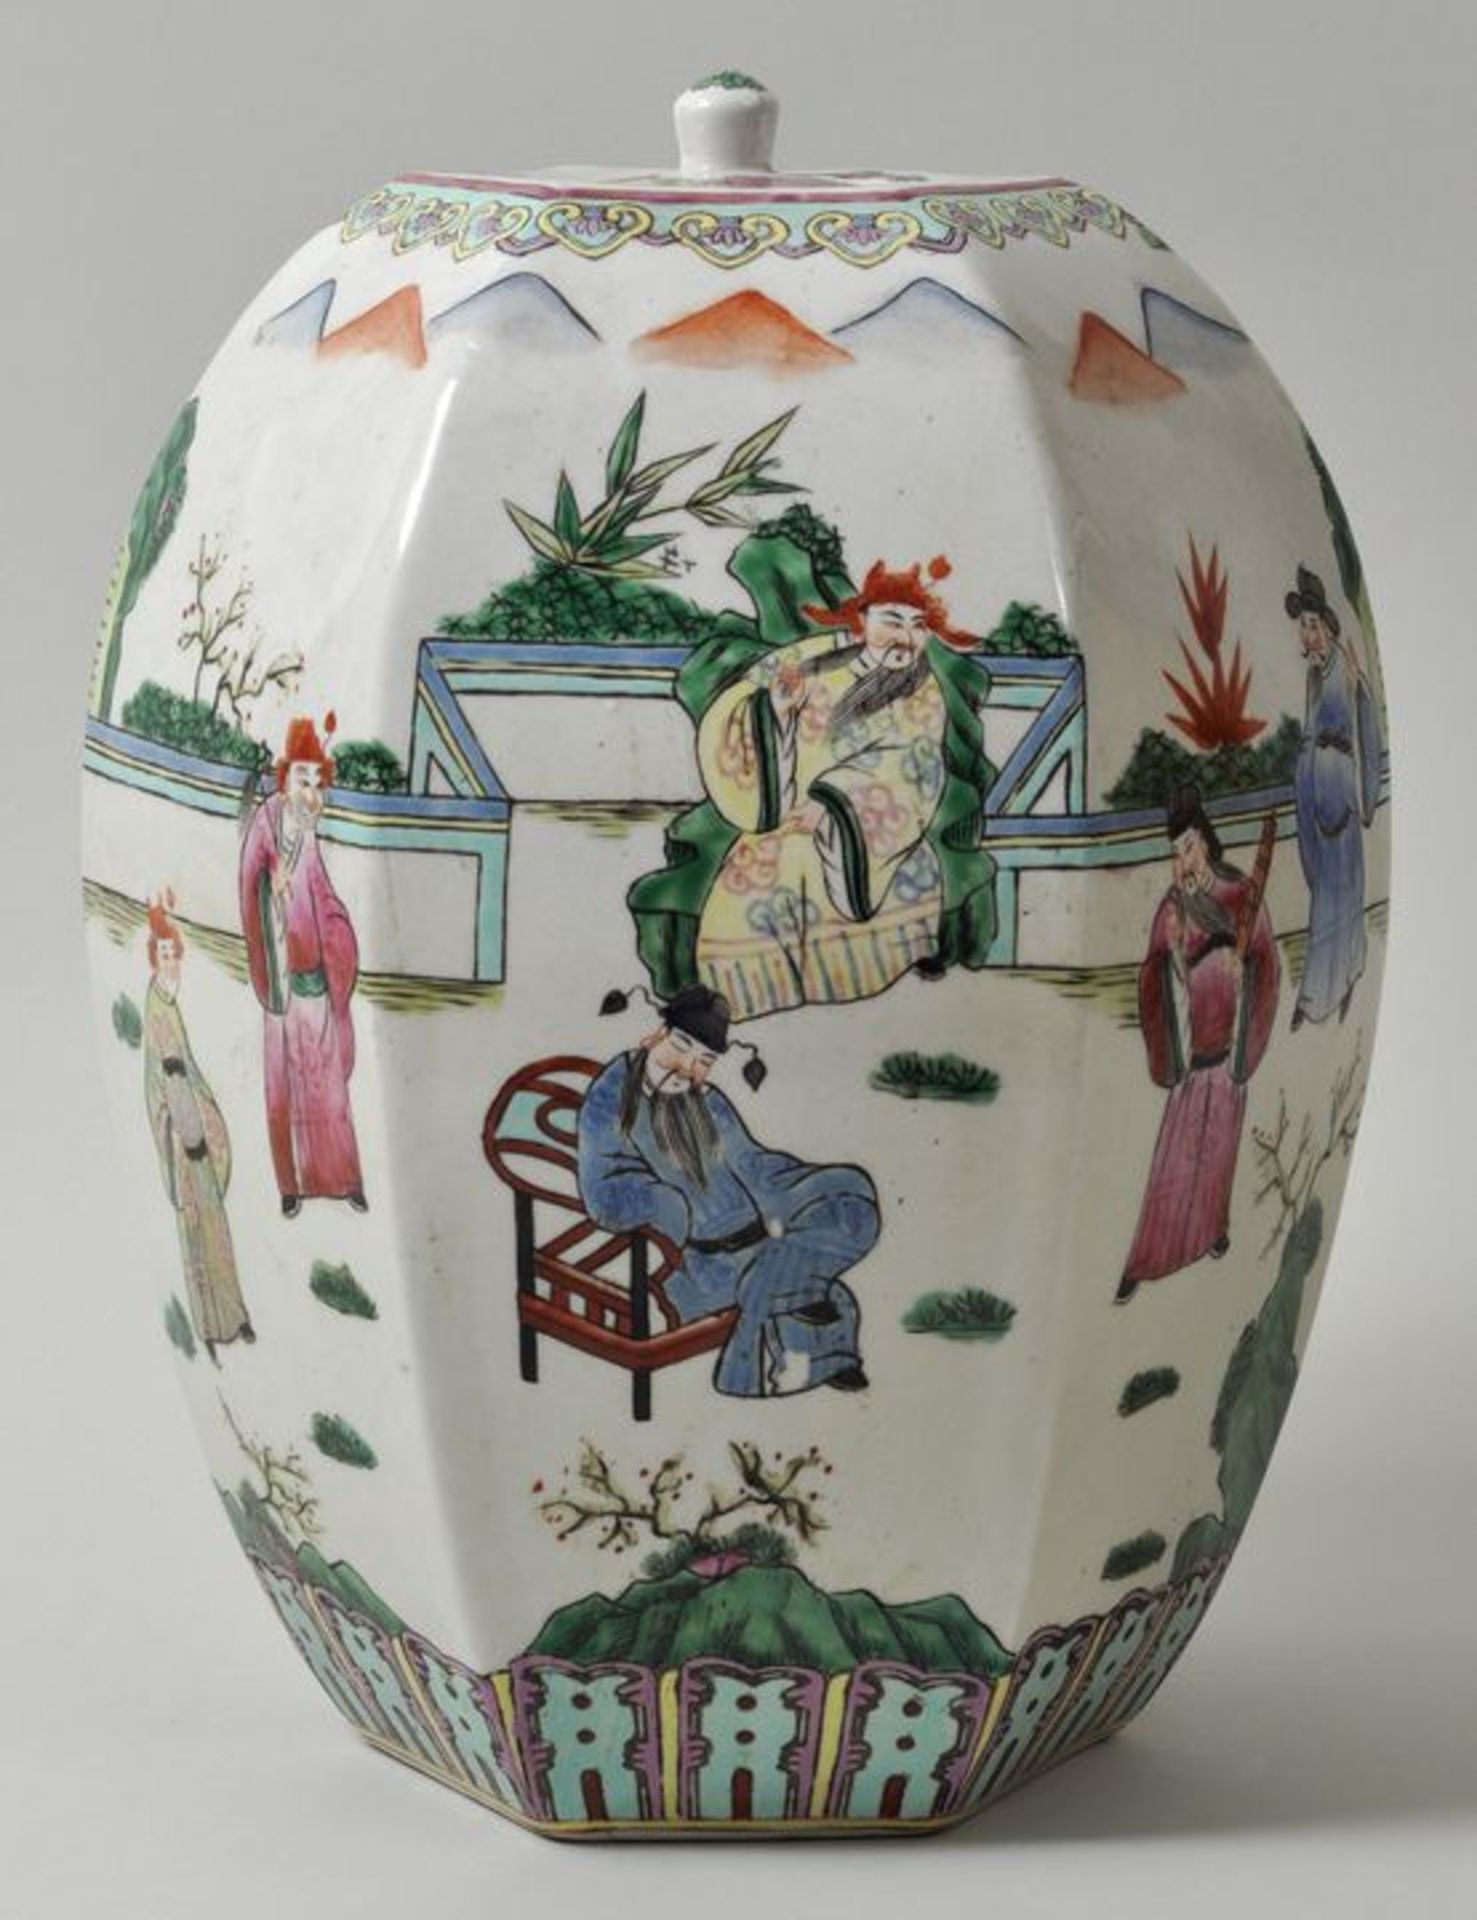 Deckelvase, China, sp. Qing-DynastiePorzellan, bauchiger Korpus mit hexagonalem Querschnitt.